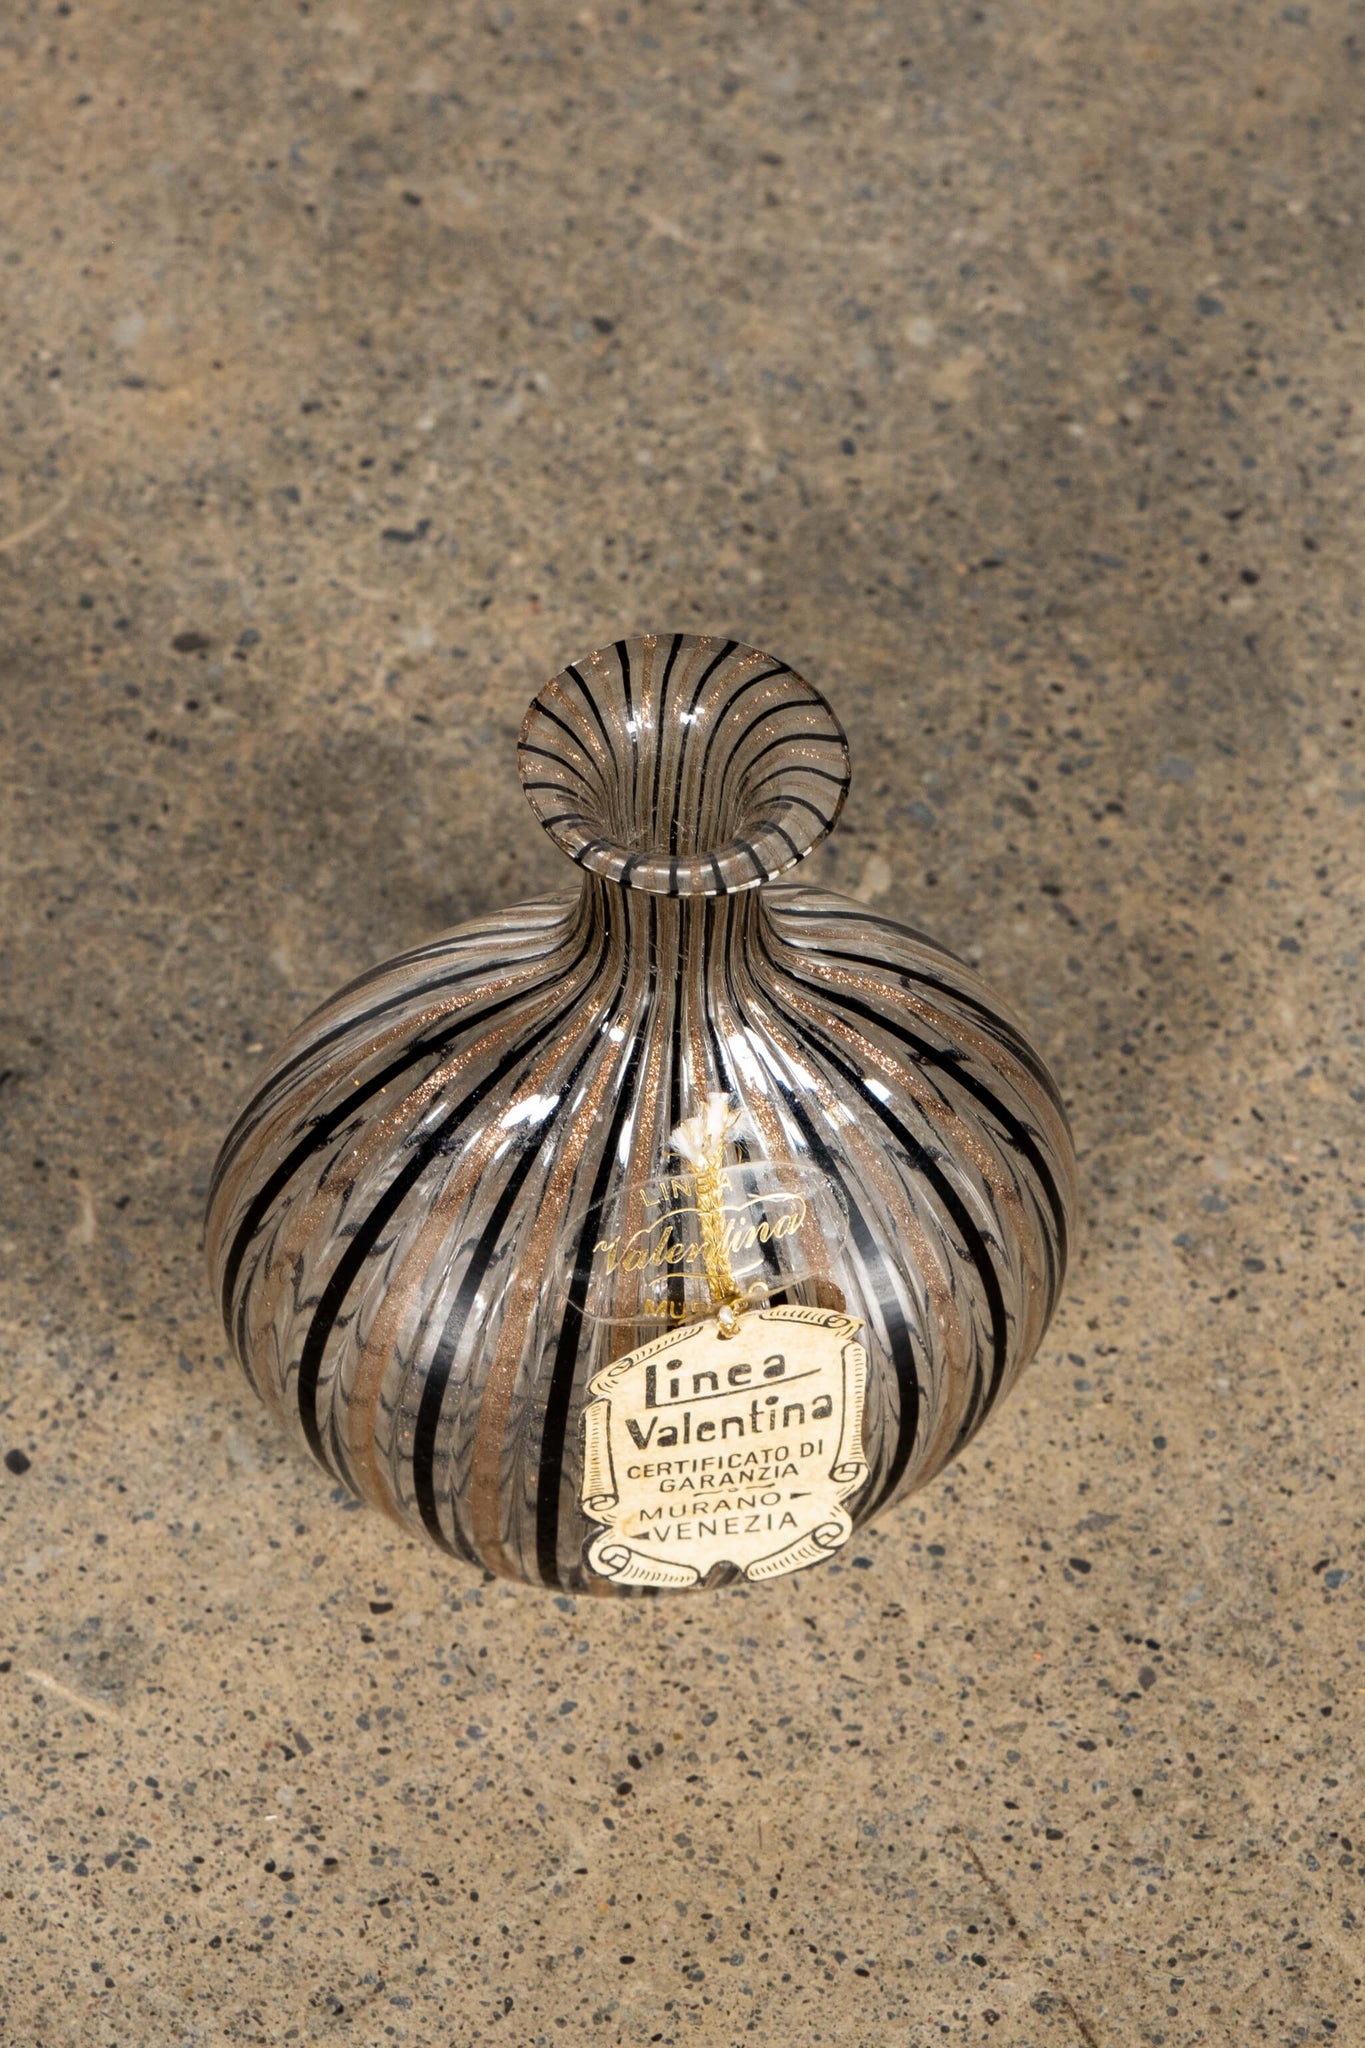 Bonne Choice - Murano glass perfume bottle bud vase